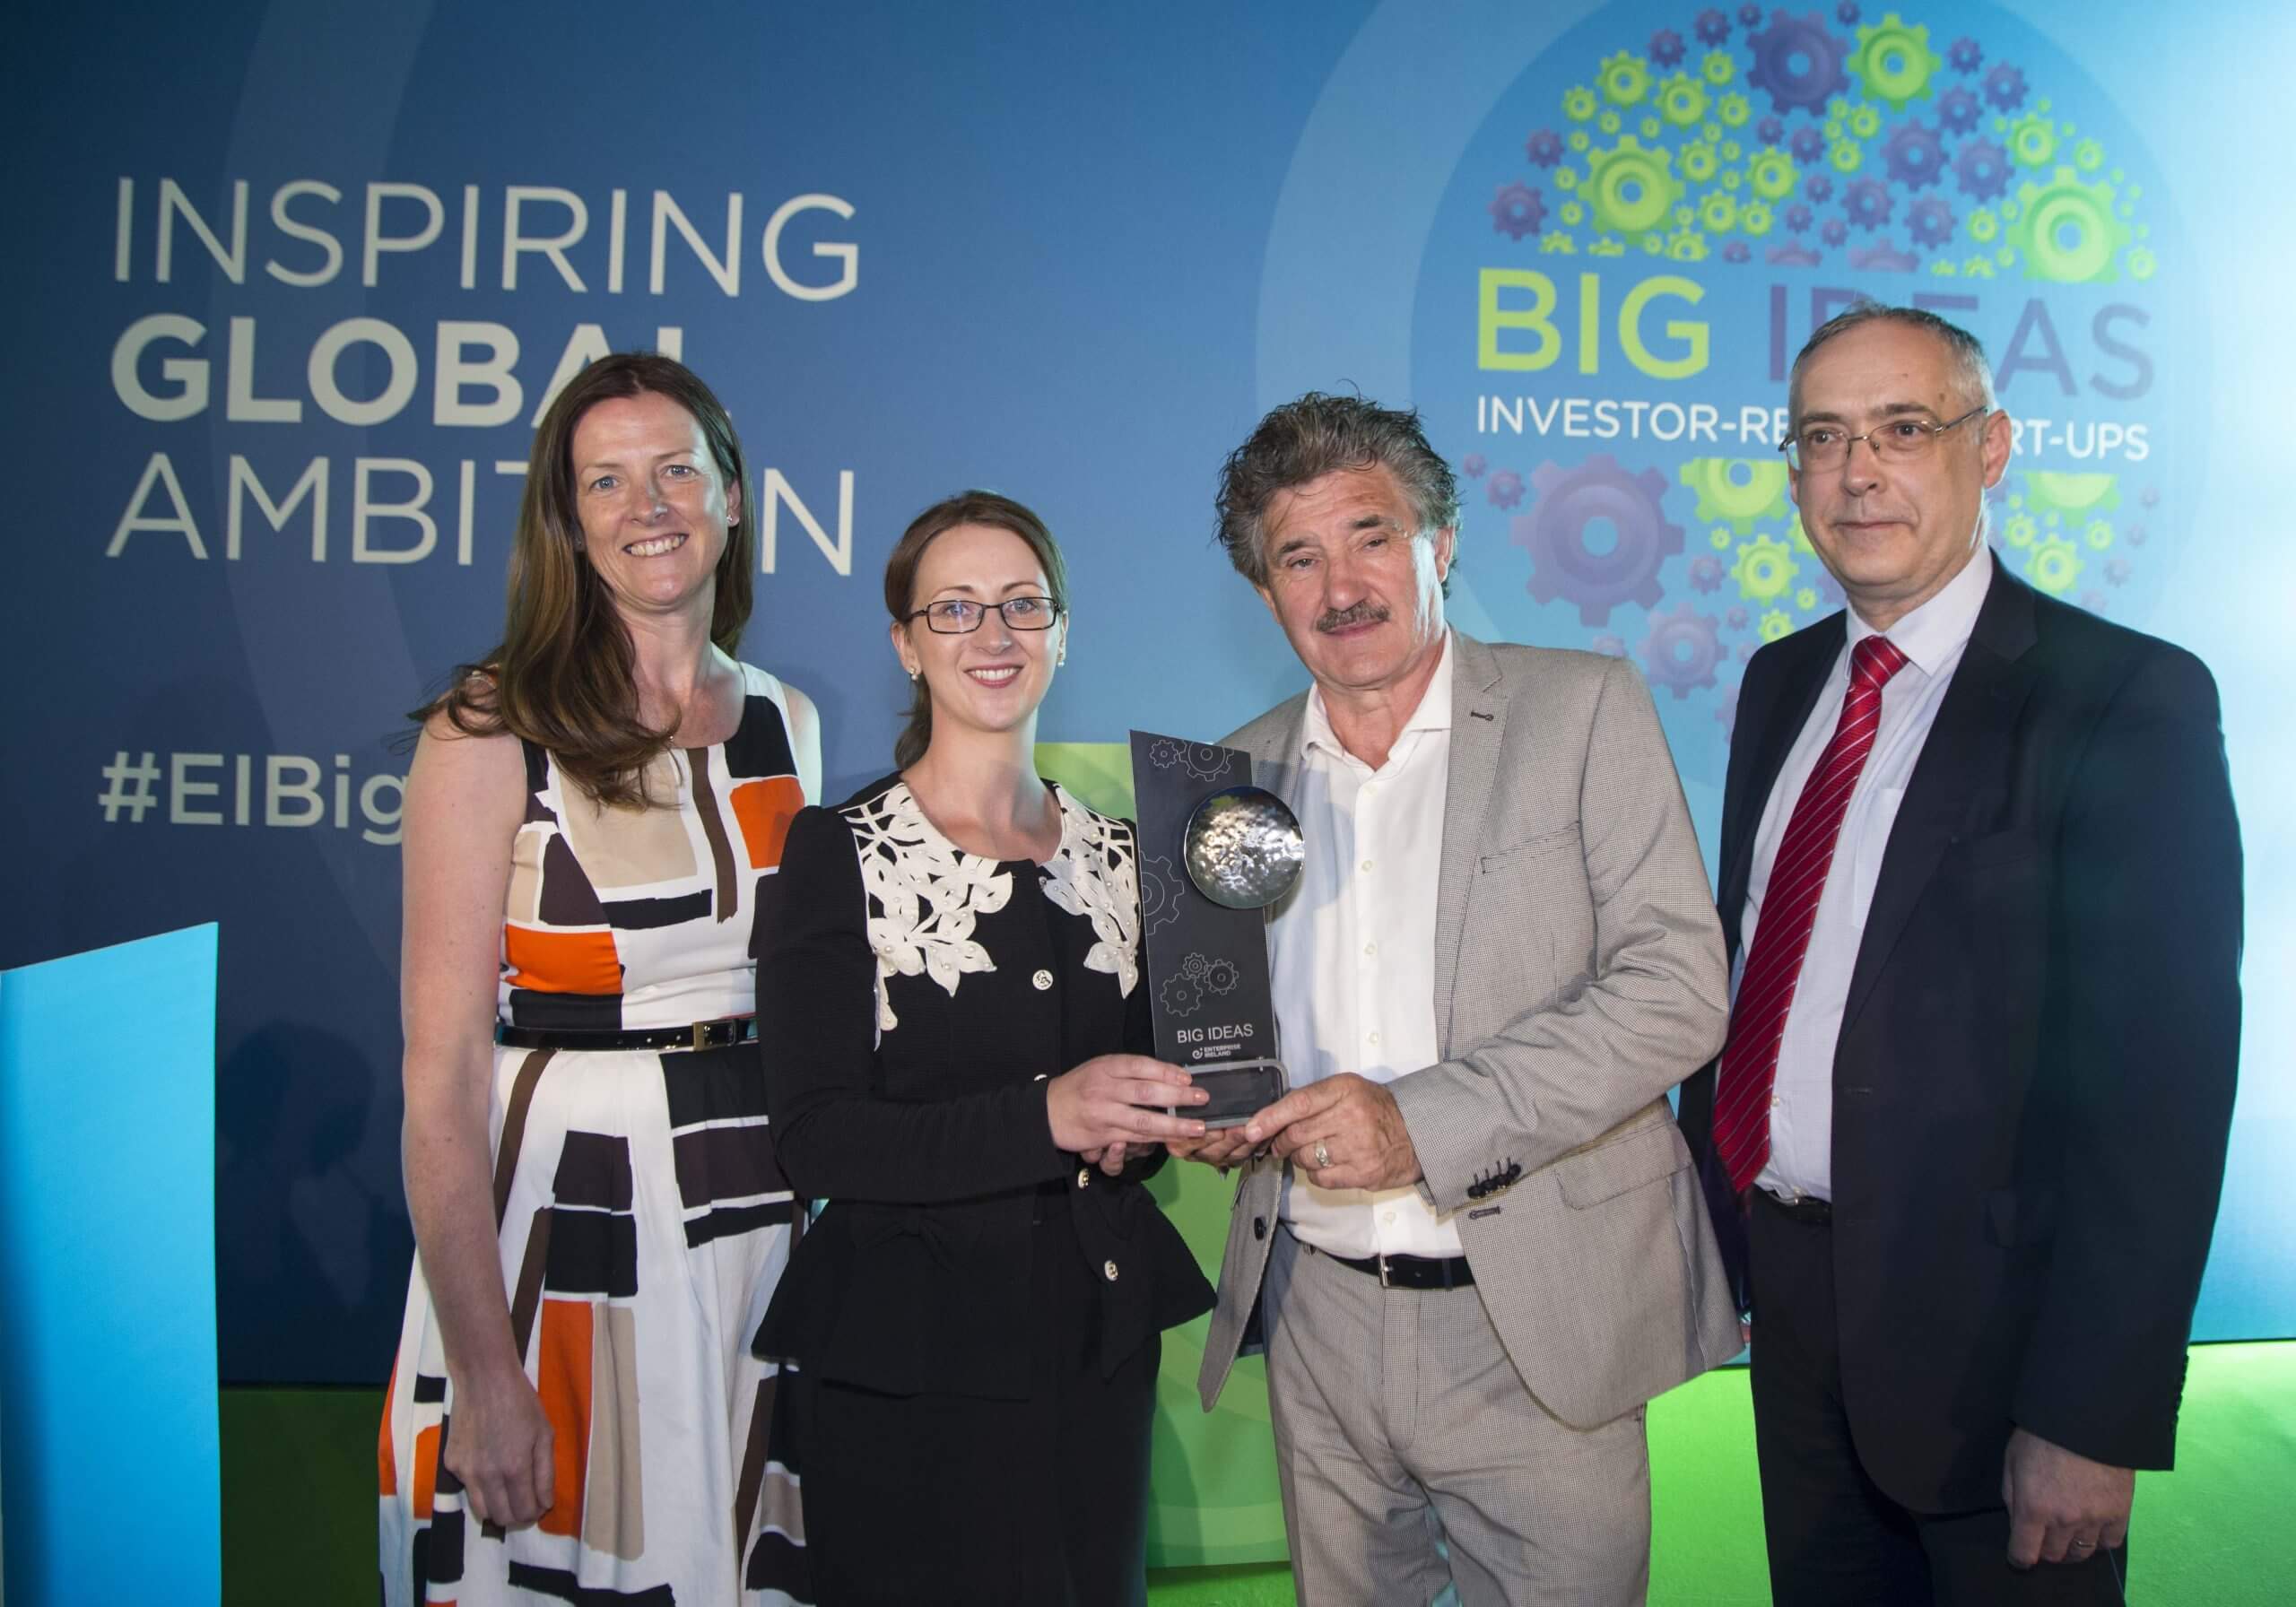 “One to Watch Award” winner announced at Enterprise Ireland’s Big Ideas 2017